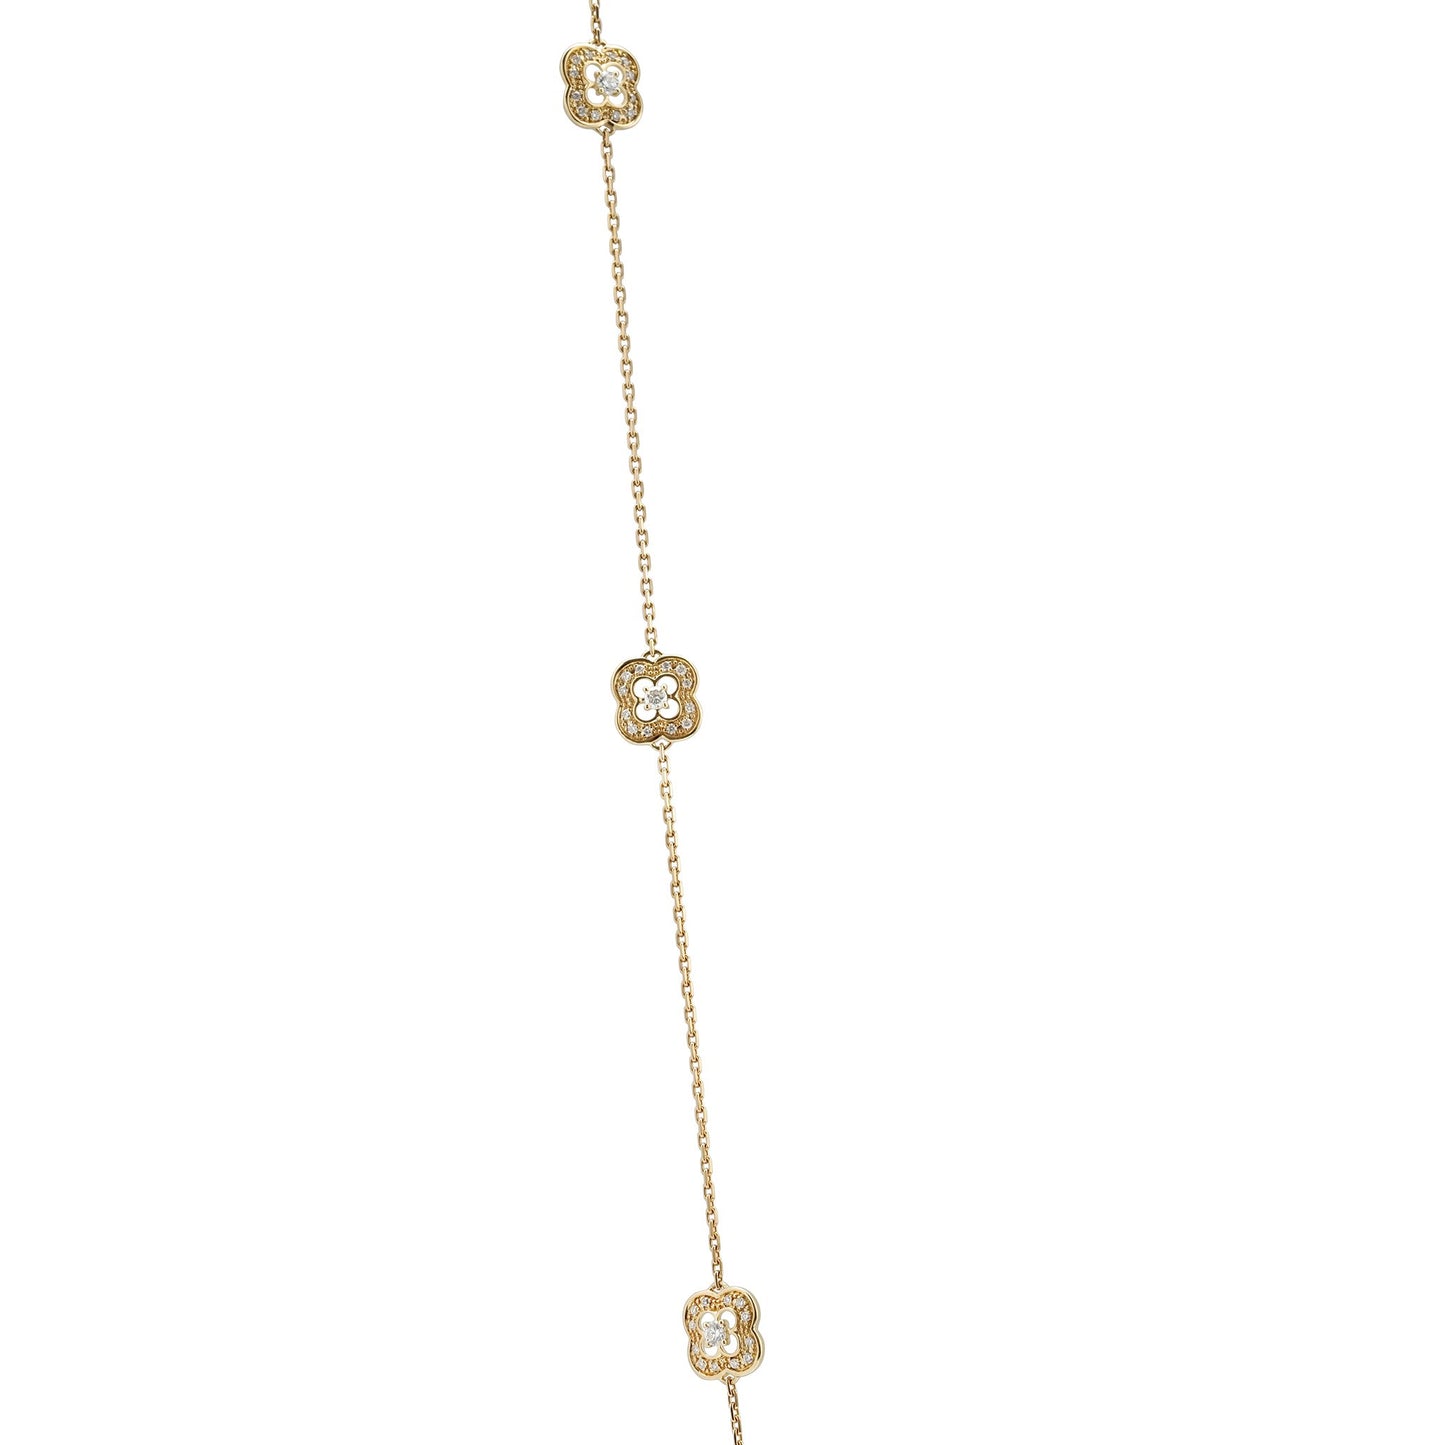 Mauboussin 18K Yellow Gold Diamond Floral Necklace Length: 36.5"